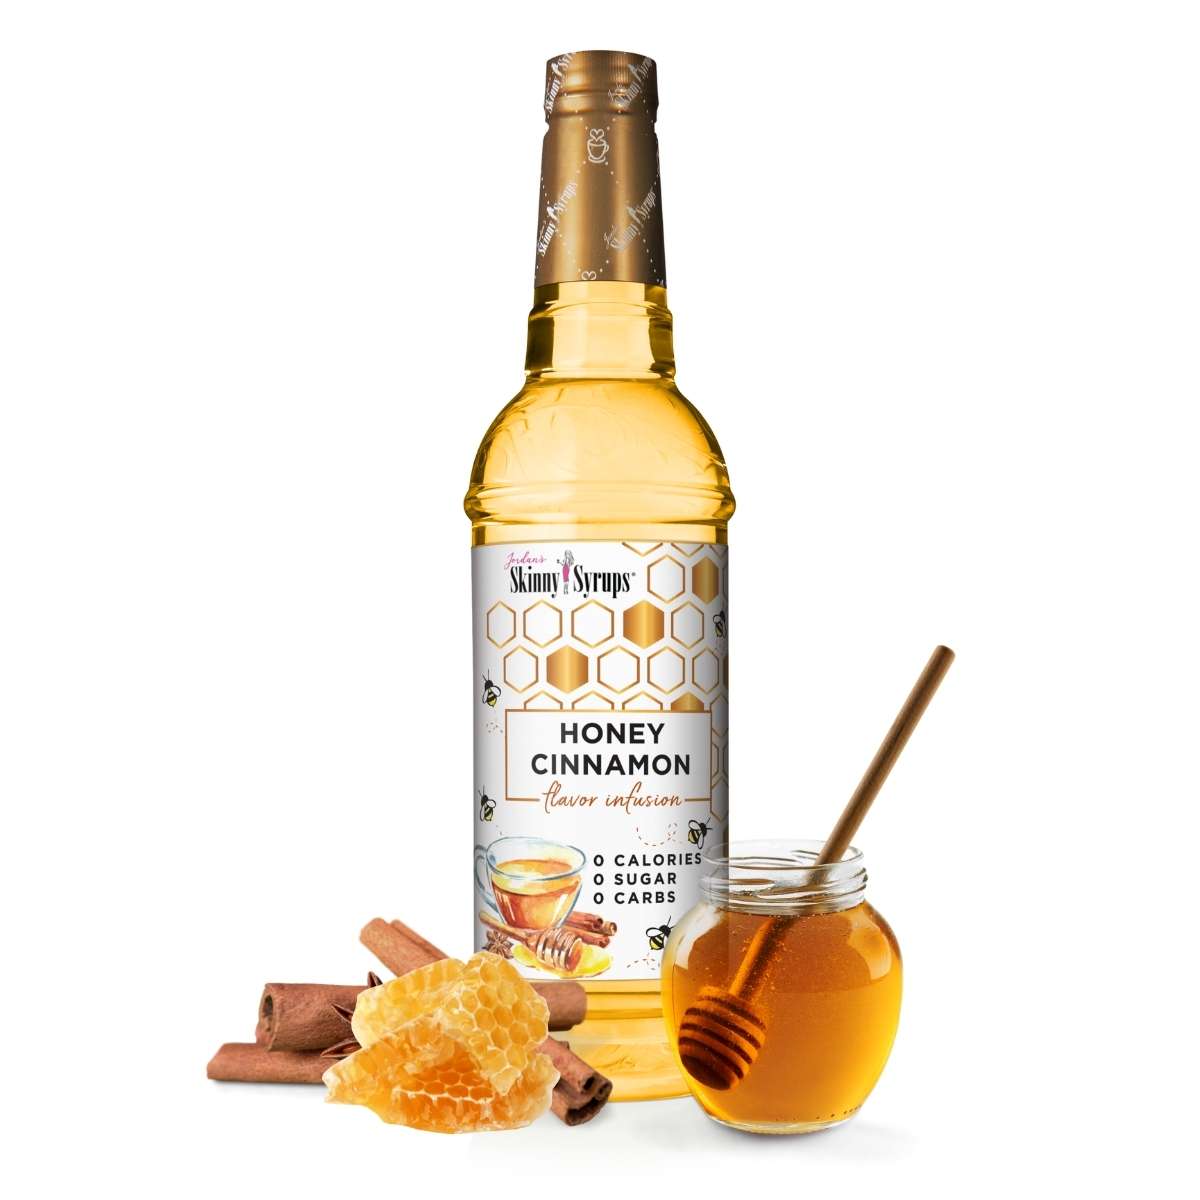 Sugar Free Honey Cinnamon Syrup - Skinny Mixes